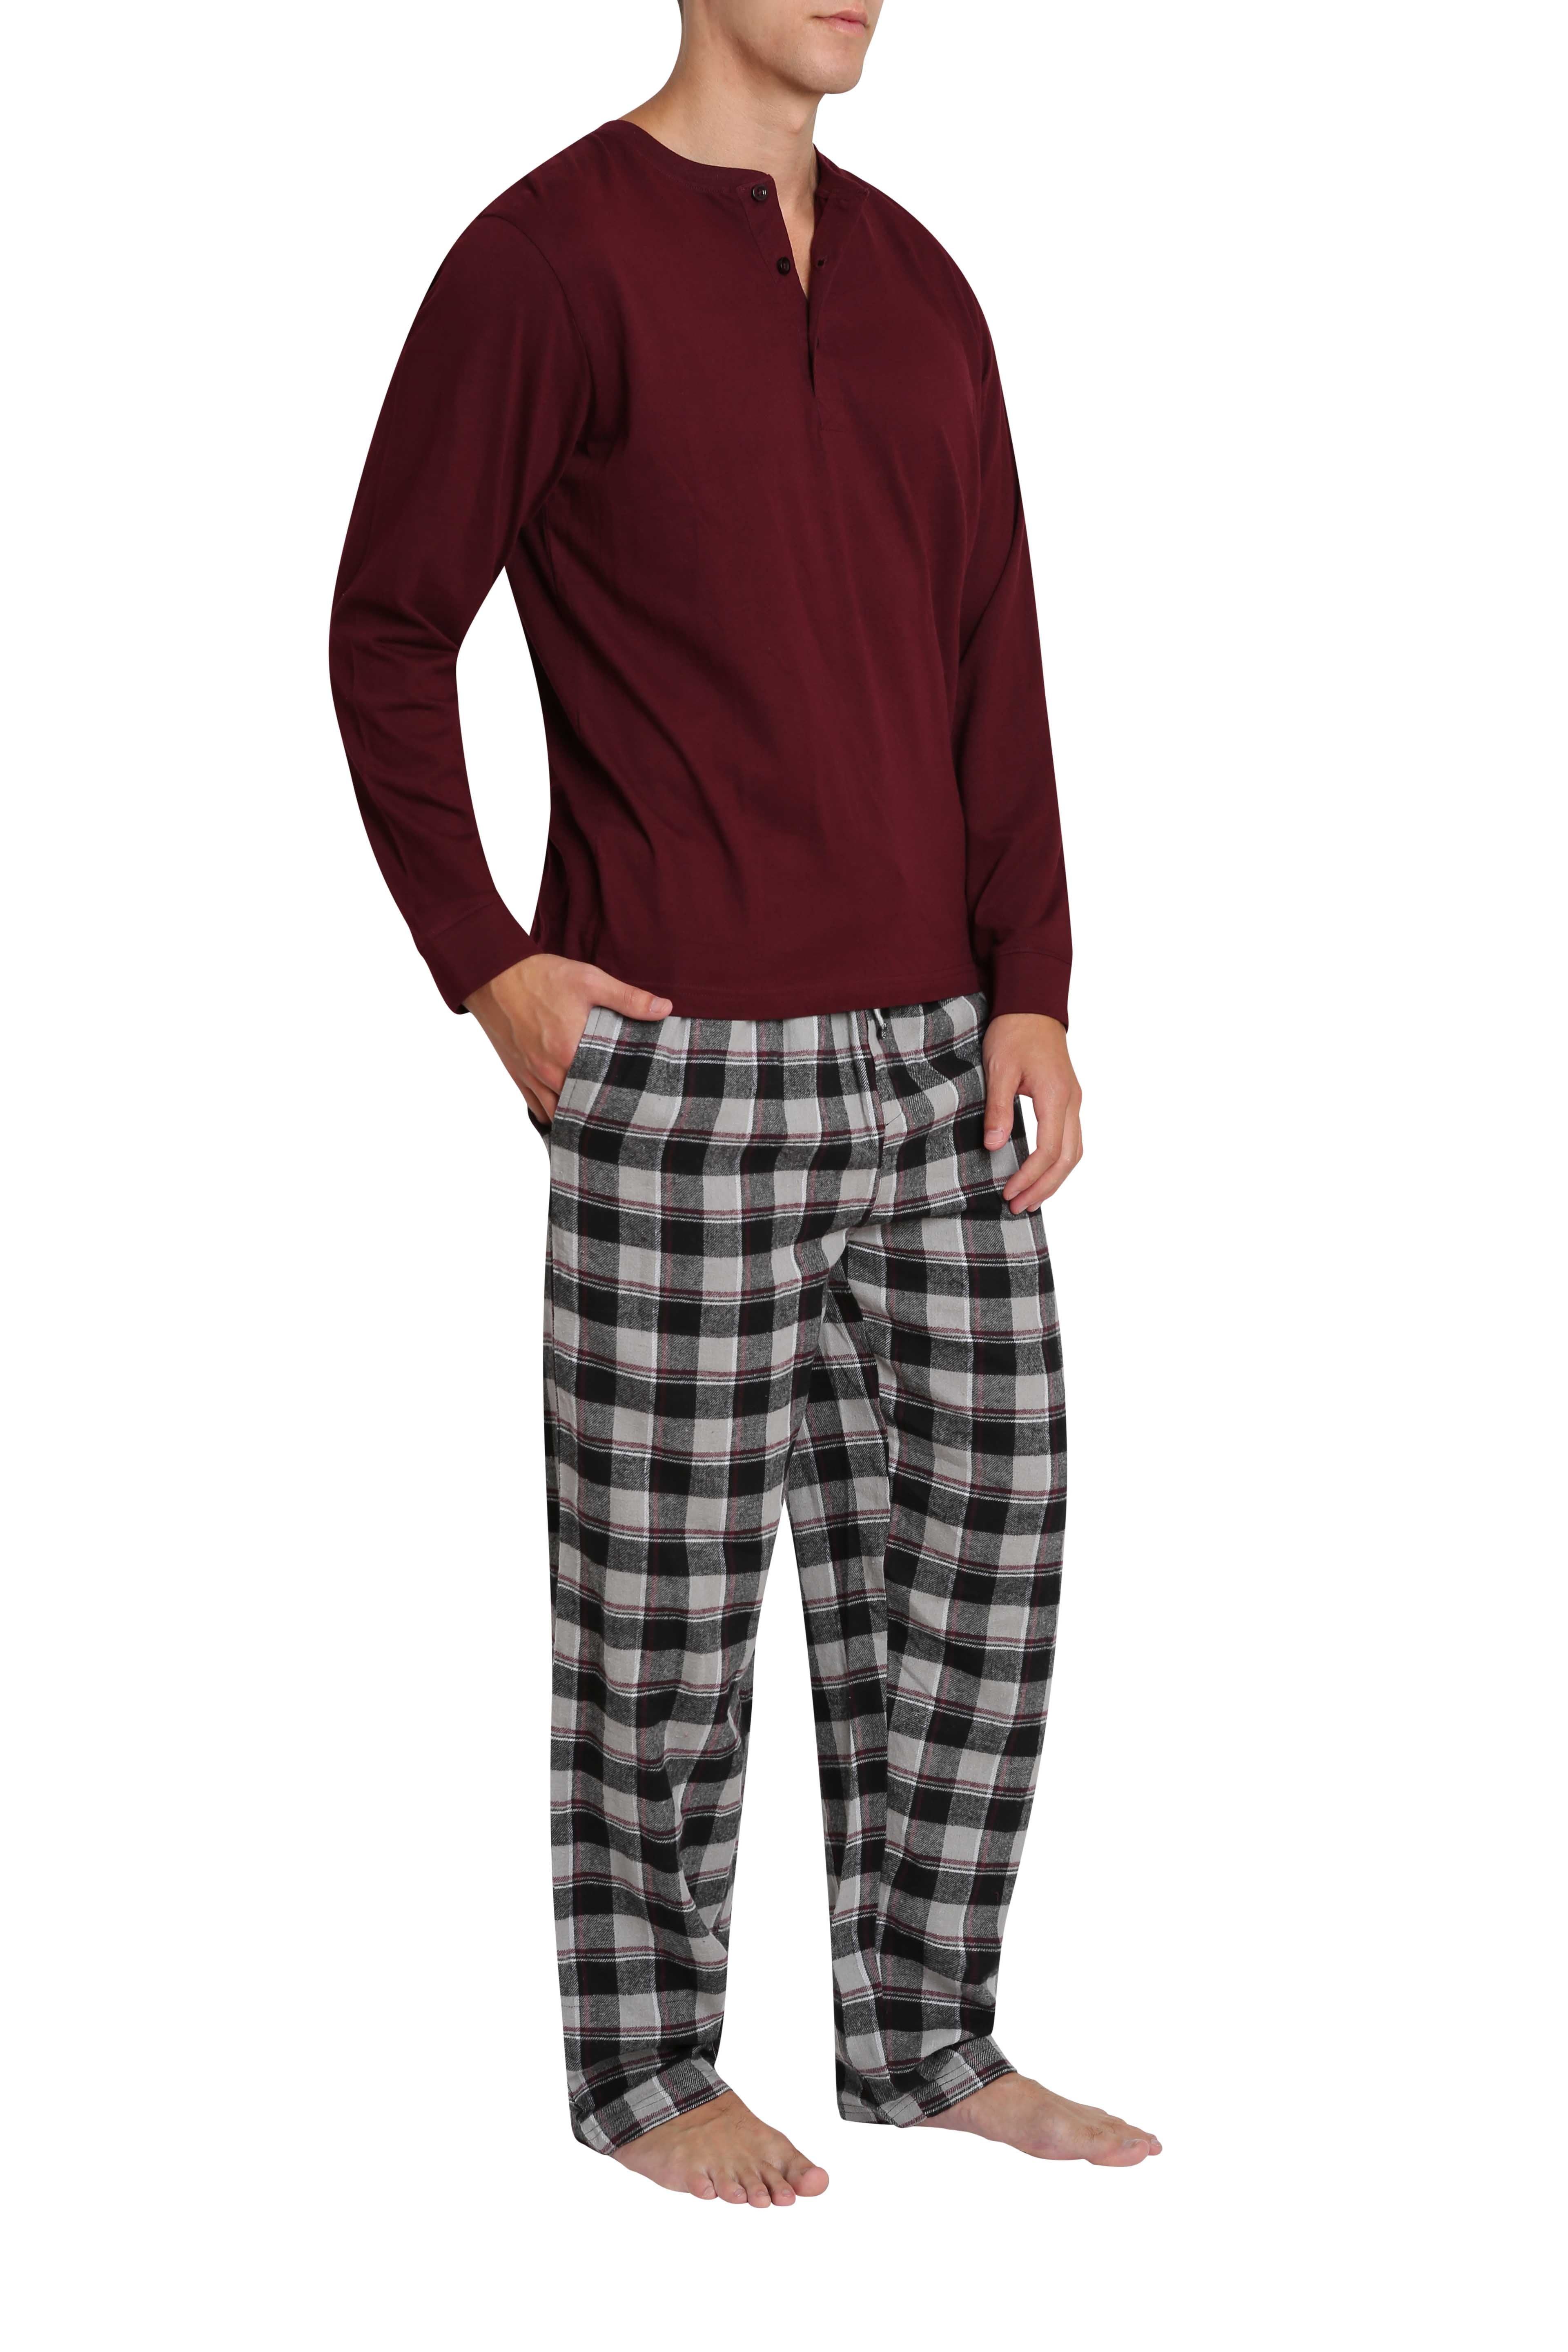 SLEEPHERO Men's Pajama Set Flannel Pajamas For Men 2 Piece PJ Set